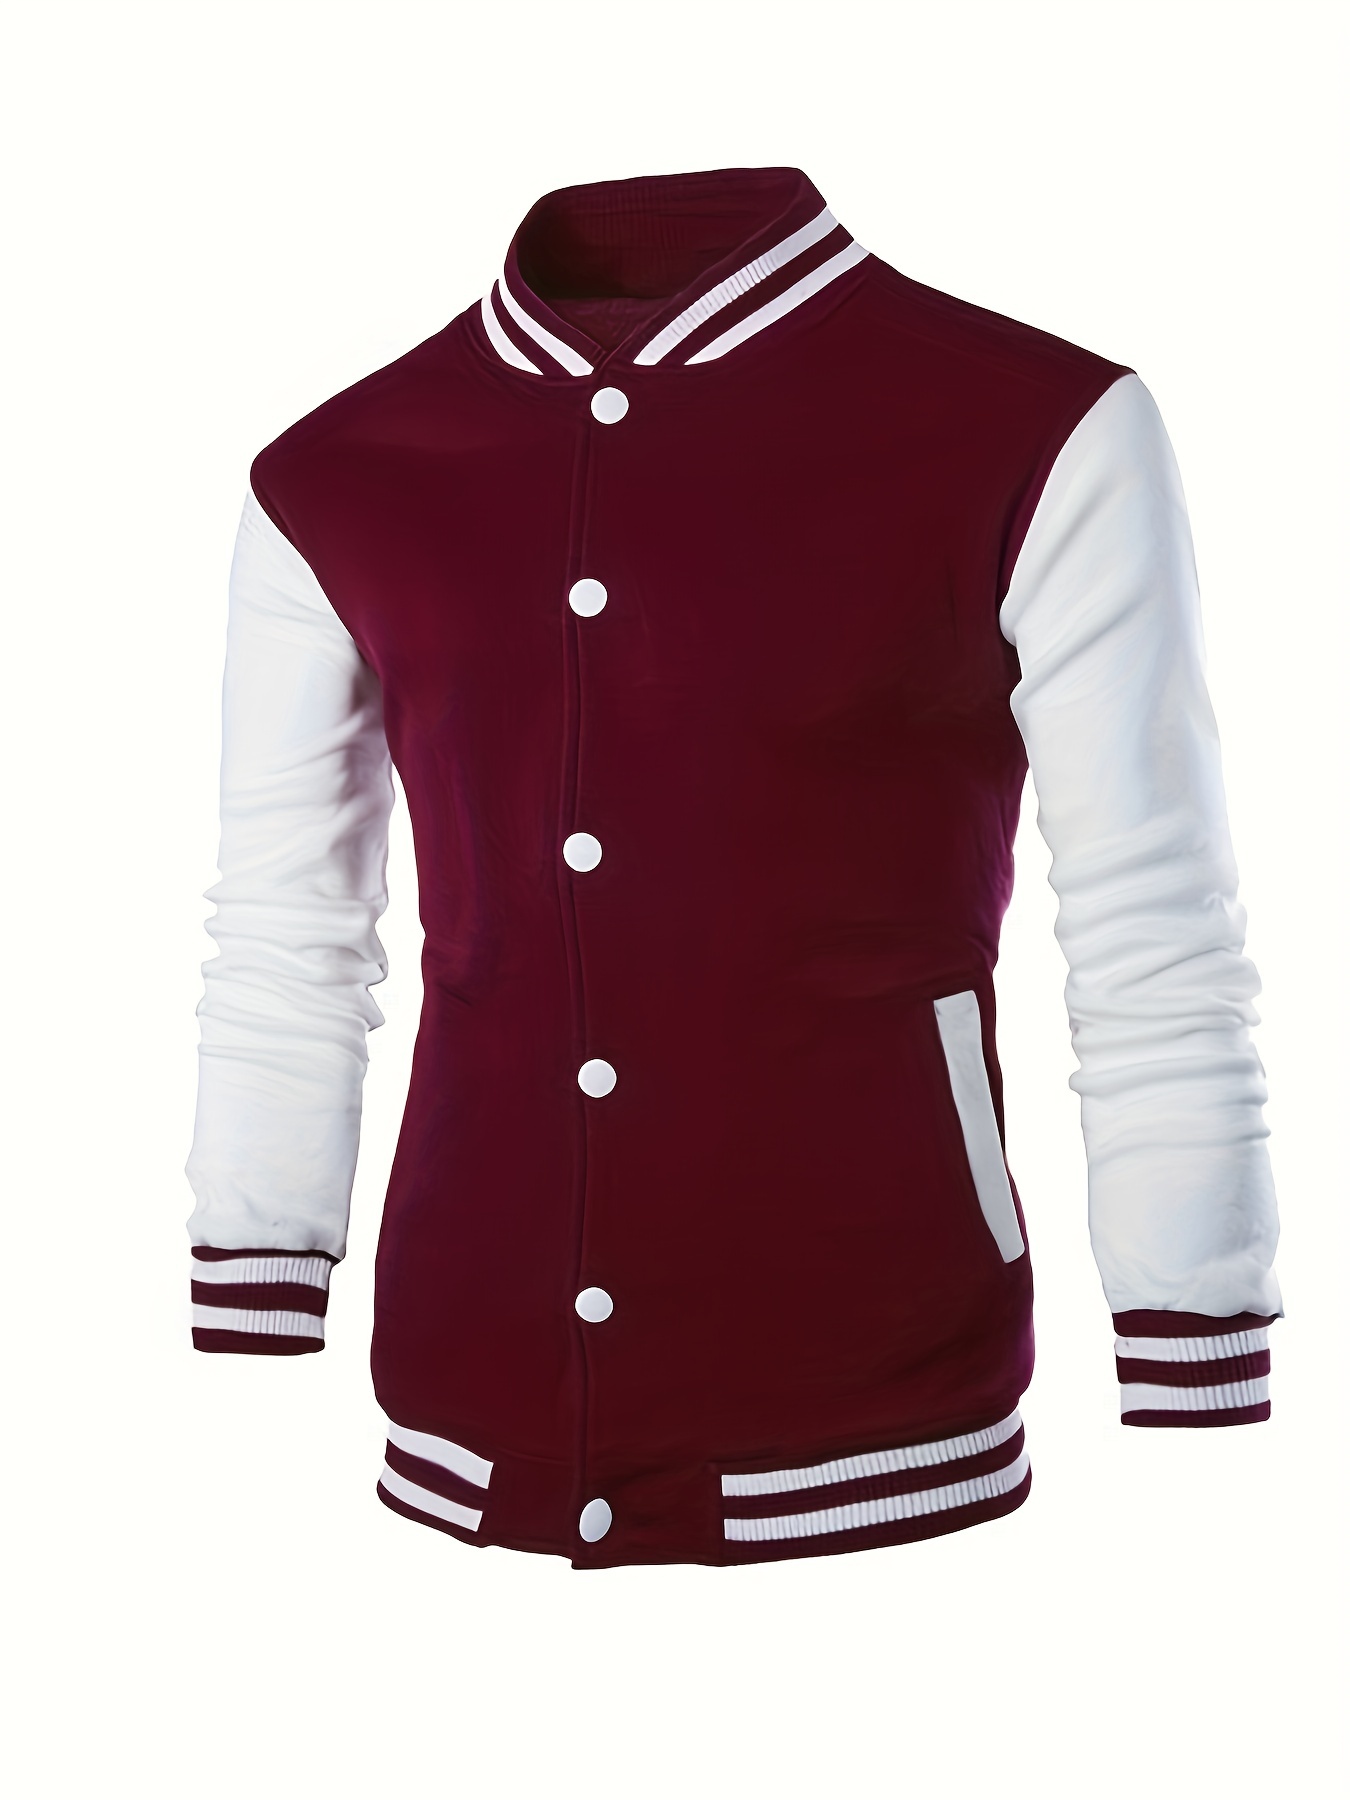 warm fleece varsity jacket mens casual color block button up jacket for fall winter school details 20